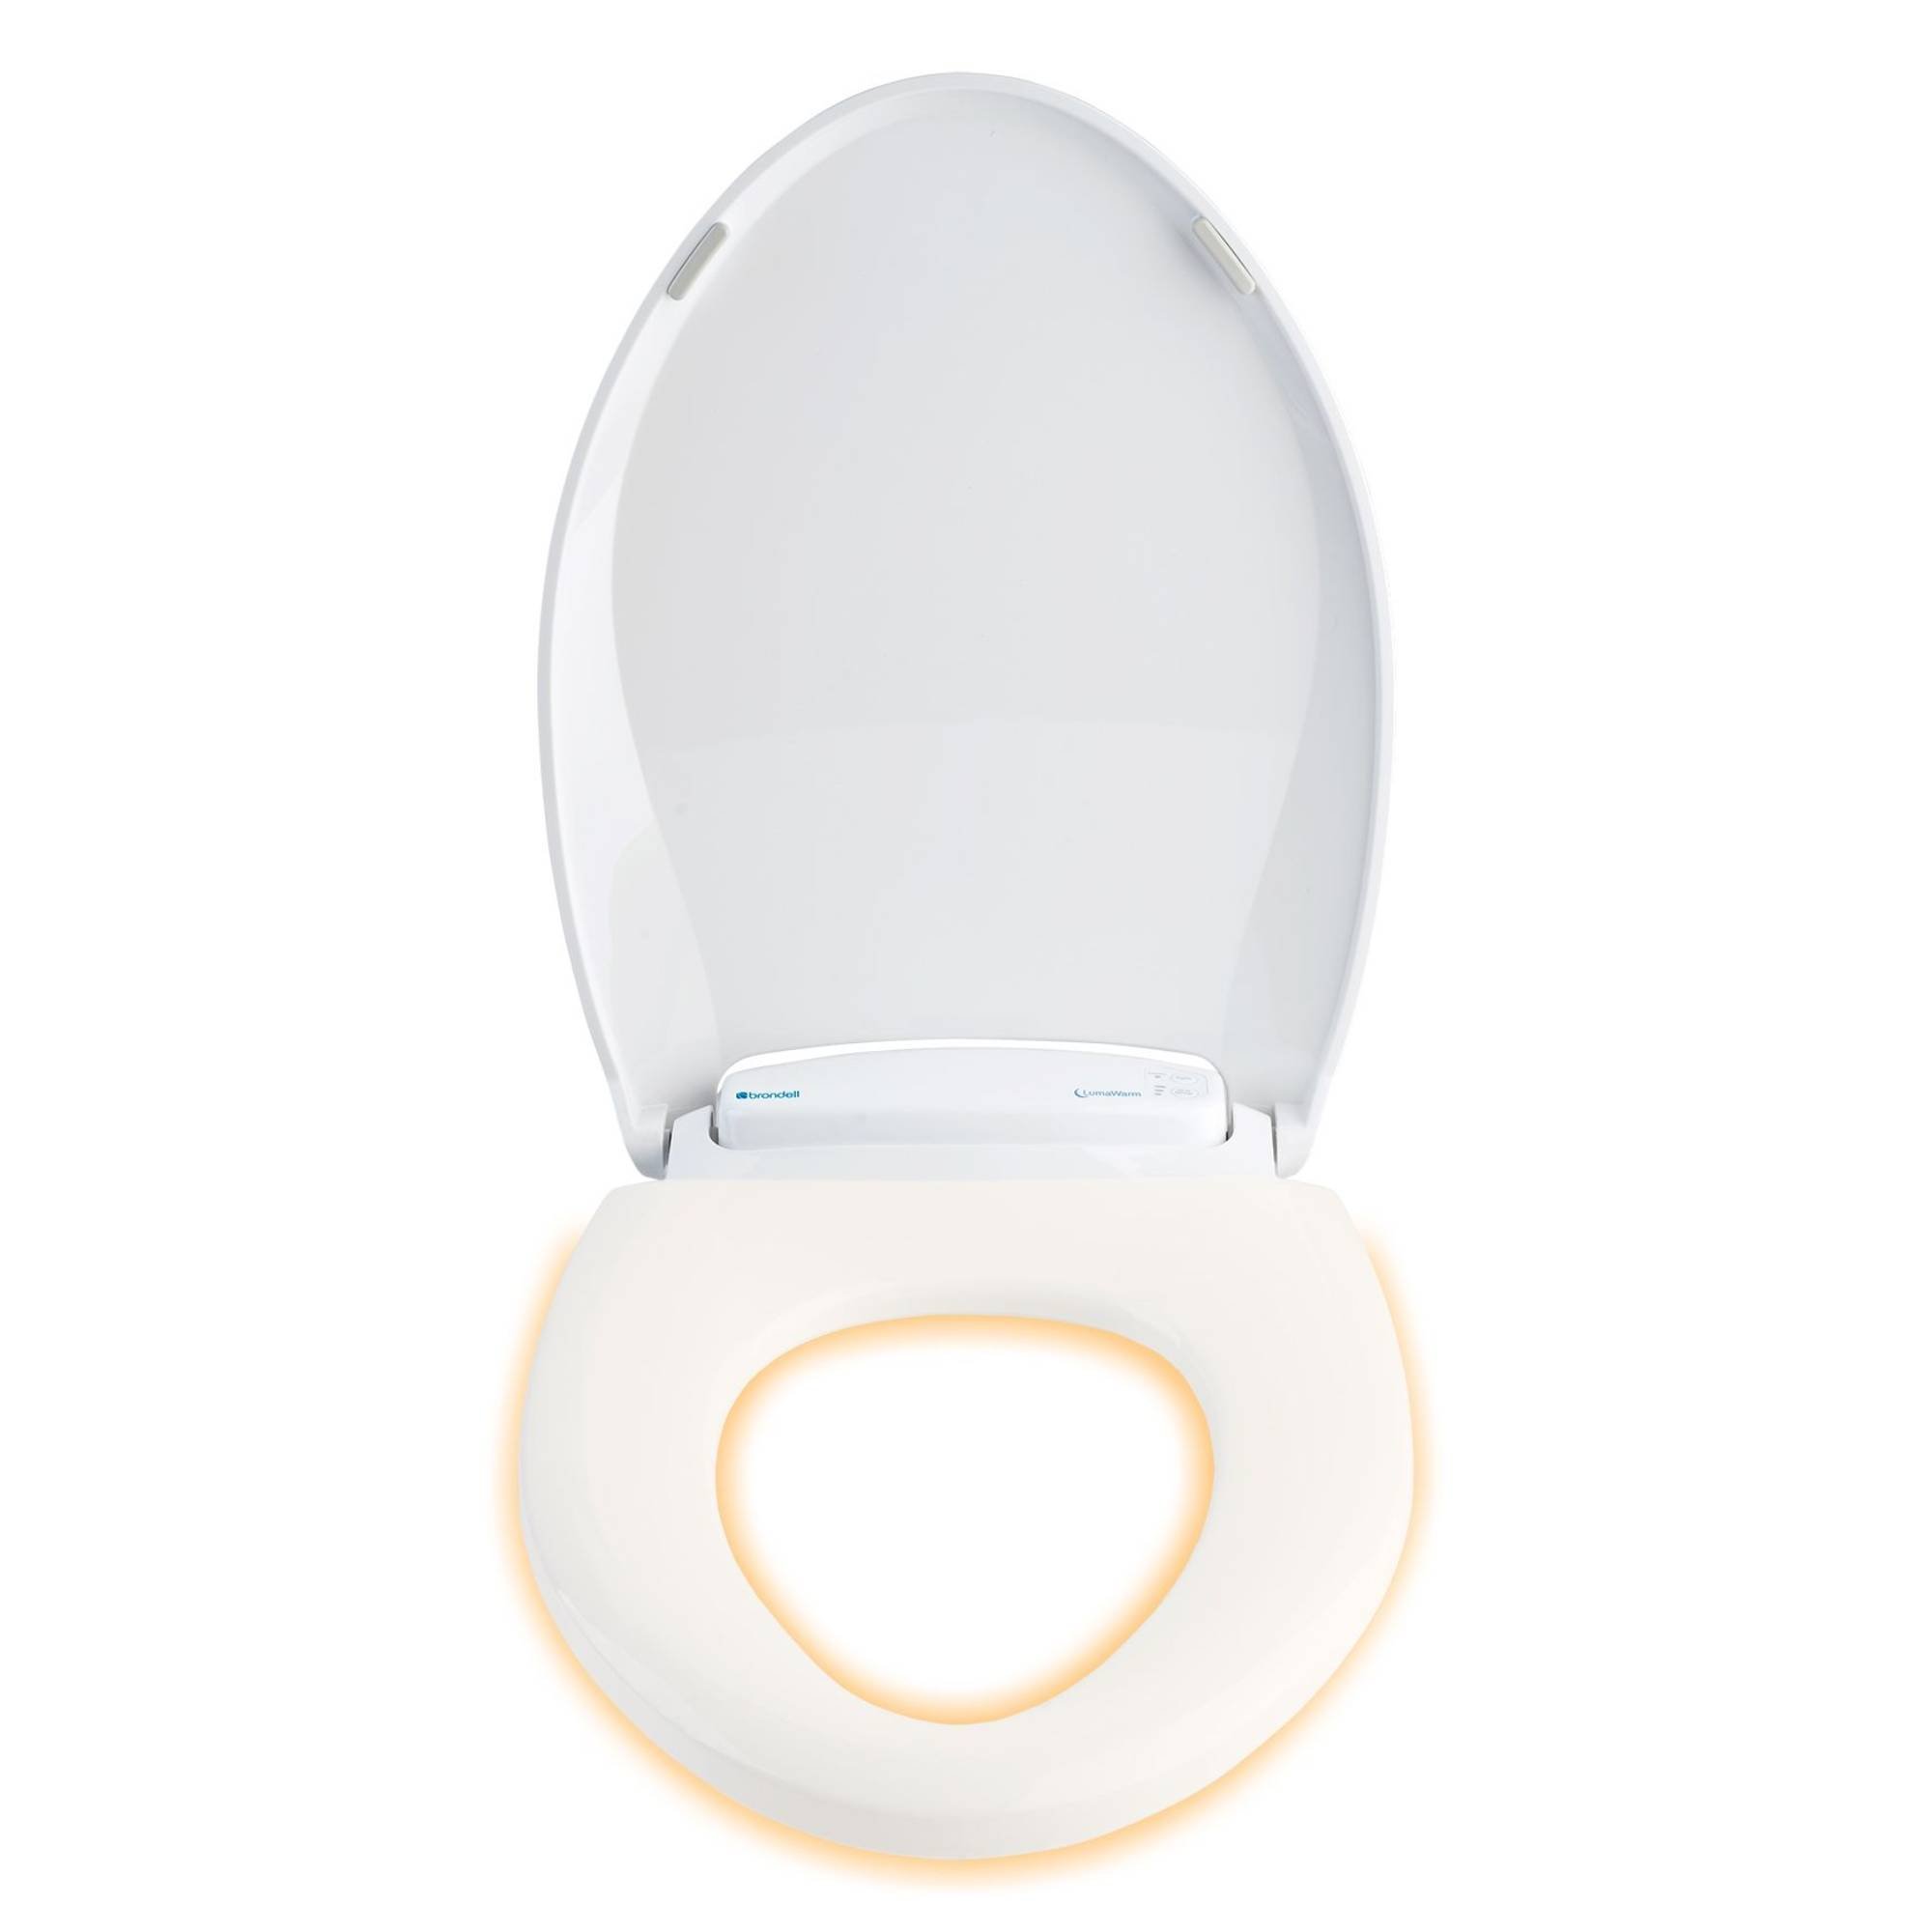 Brondell LumaWarm Heated Nightlight White Toilet Seat - Round